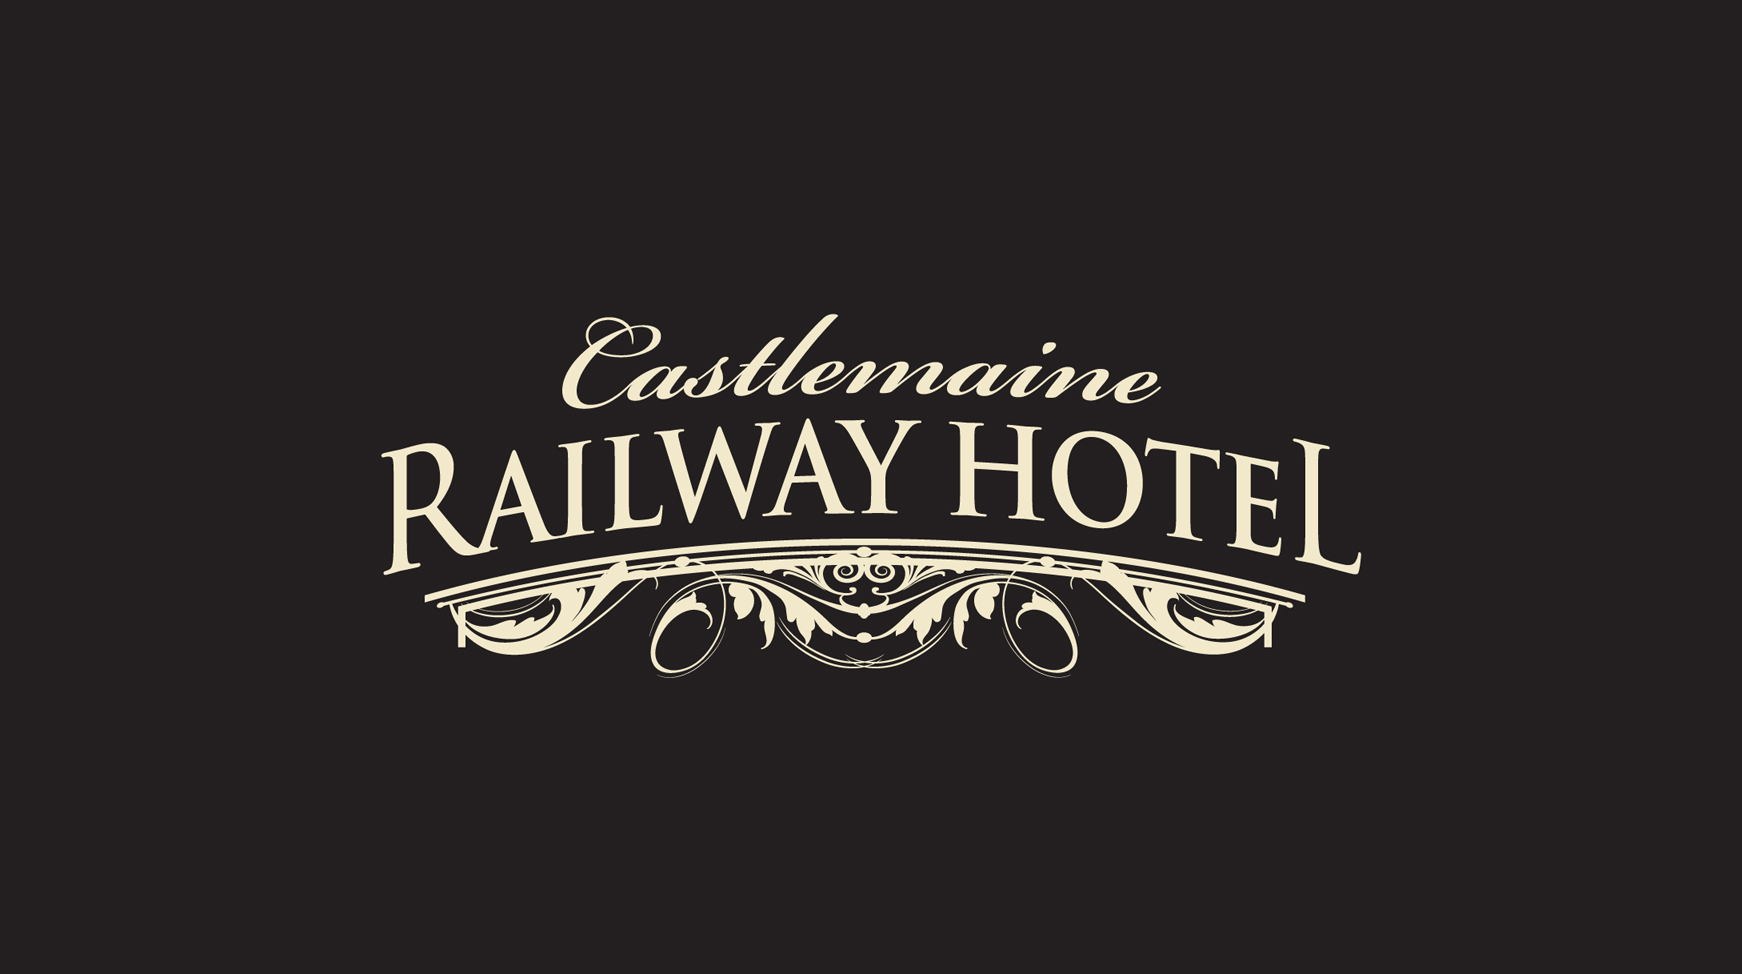 Railway Hotel Castlemaine - Accommodation in Bendigo